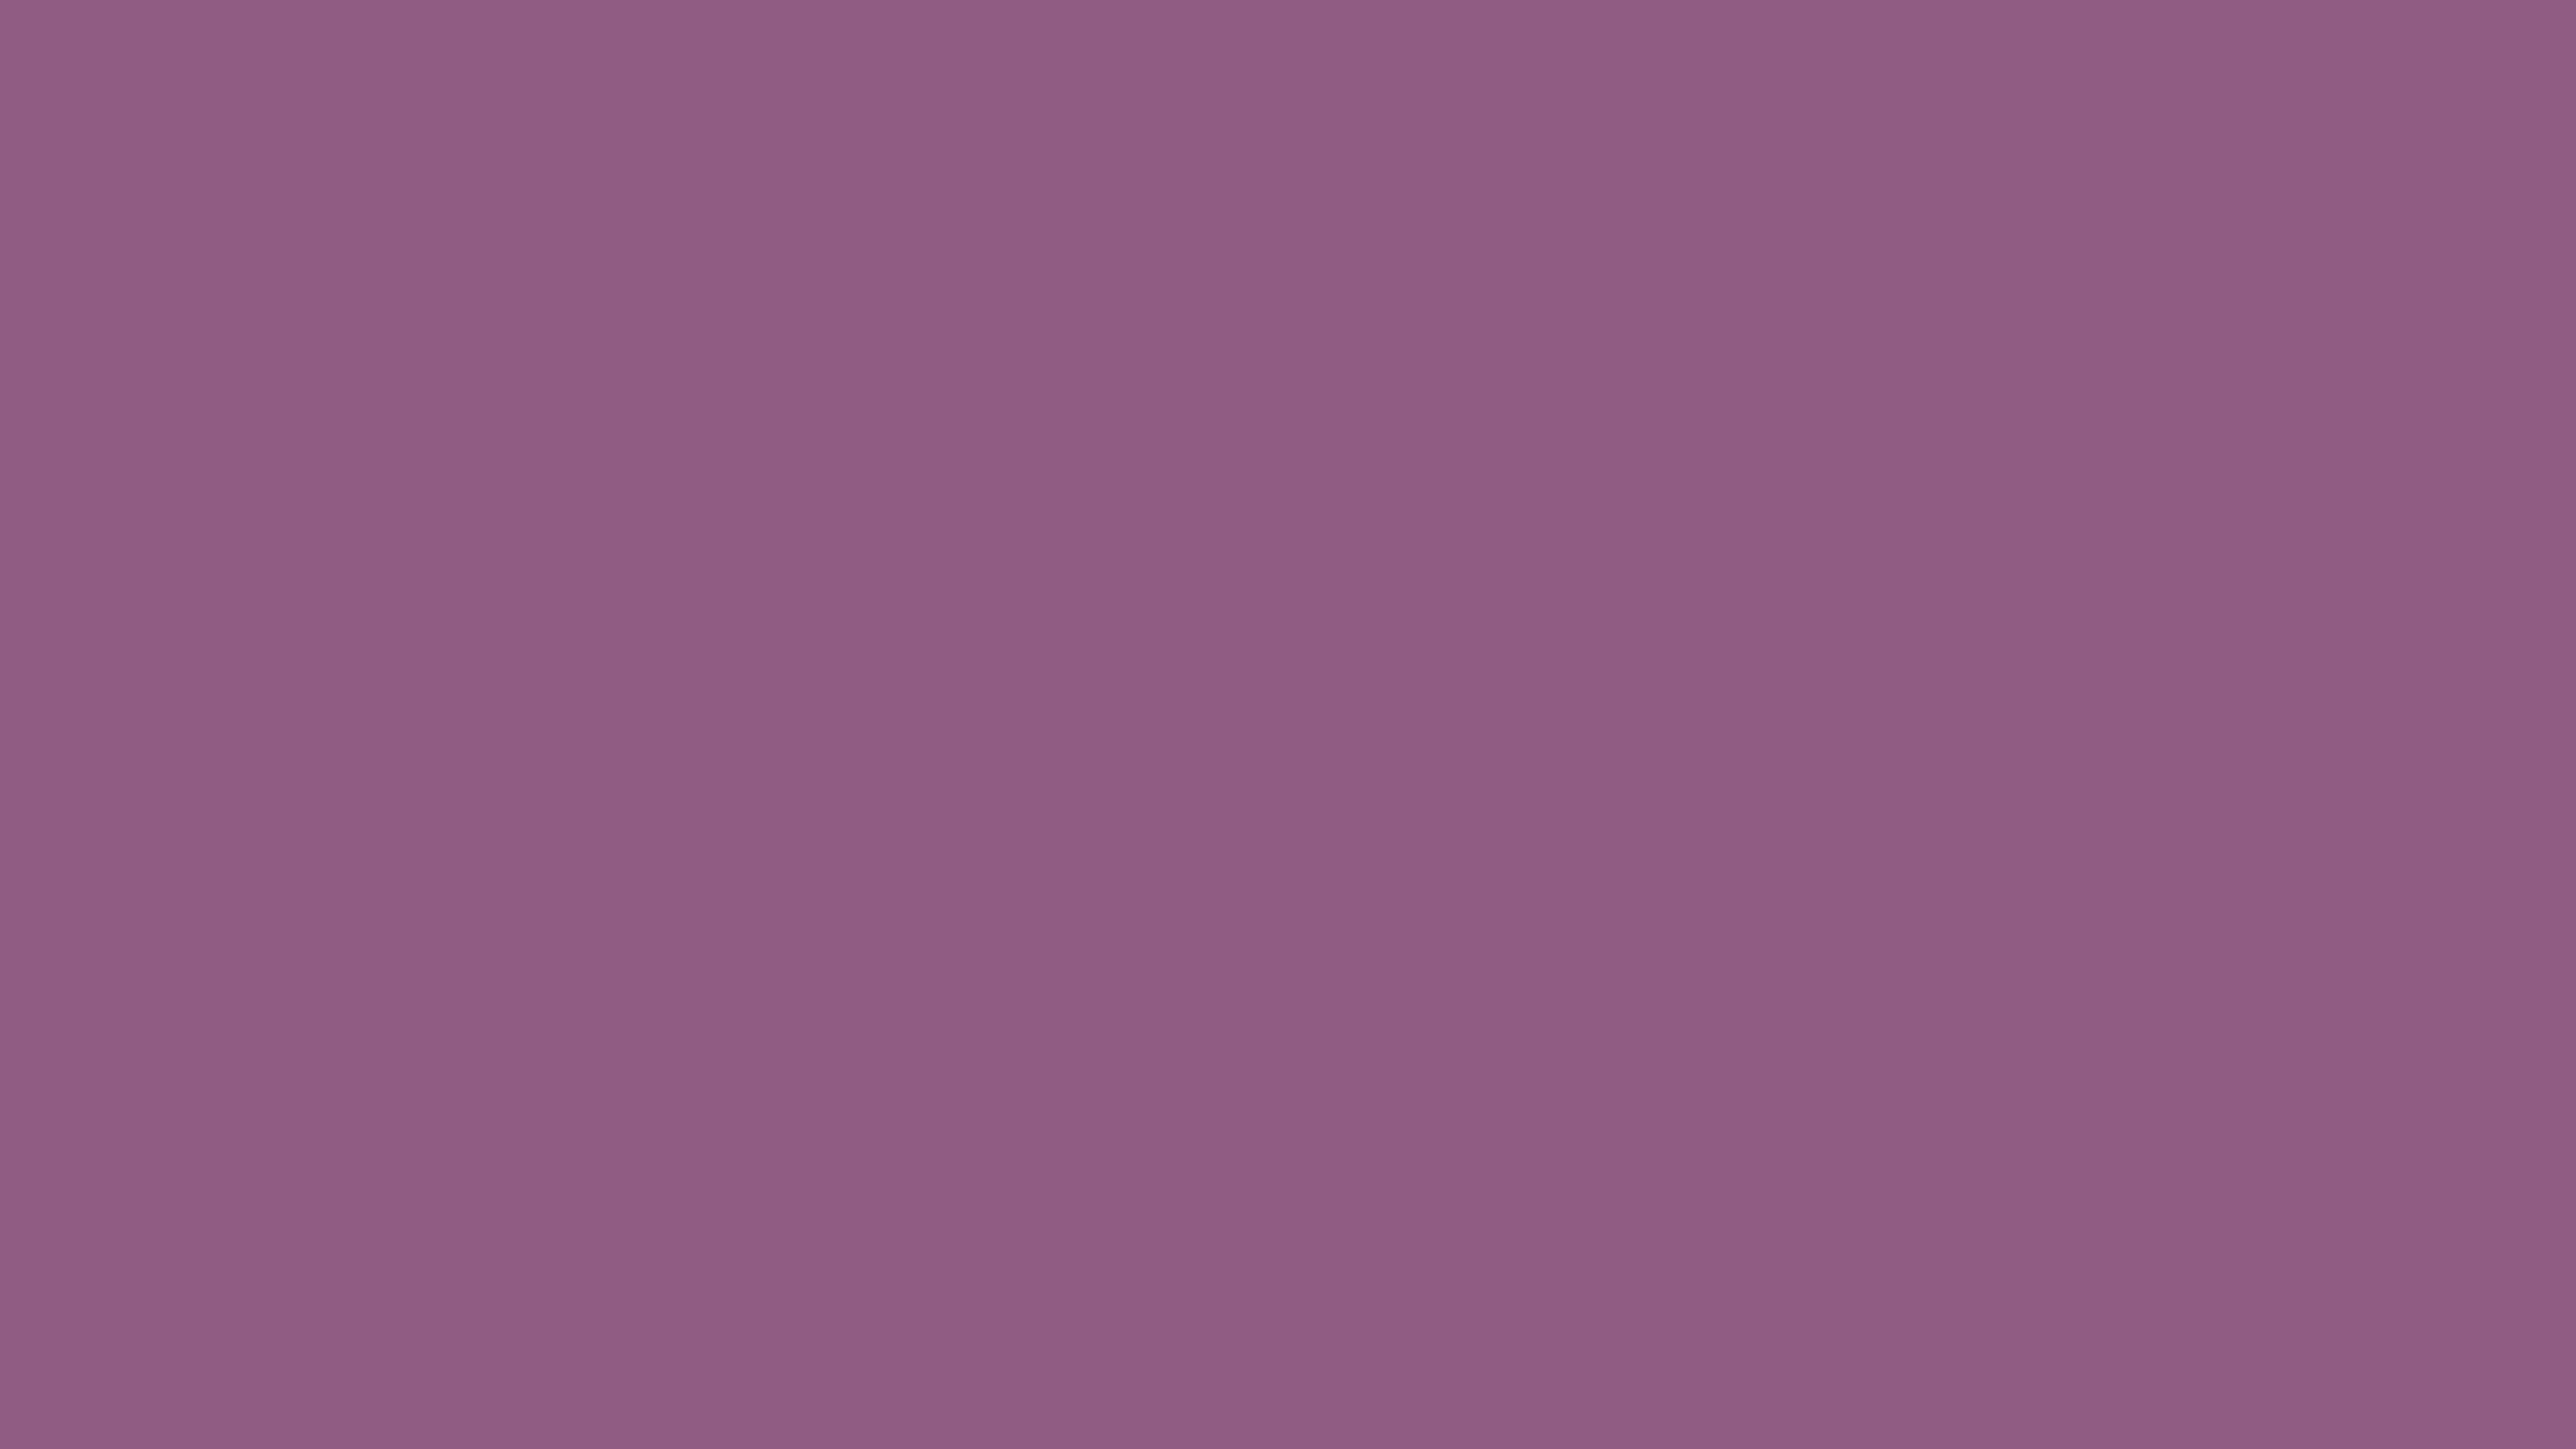 3840x2160 Antique Fuchsia Solid Color Background